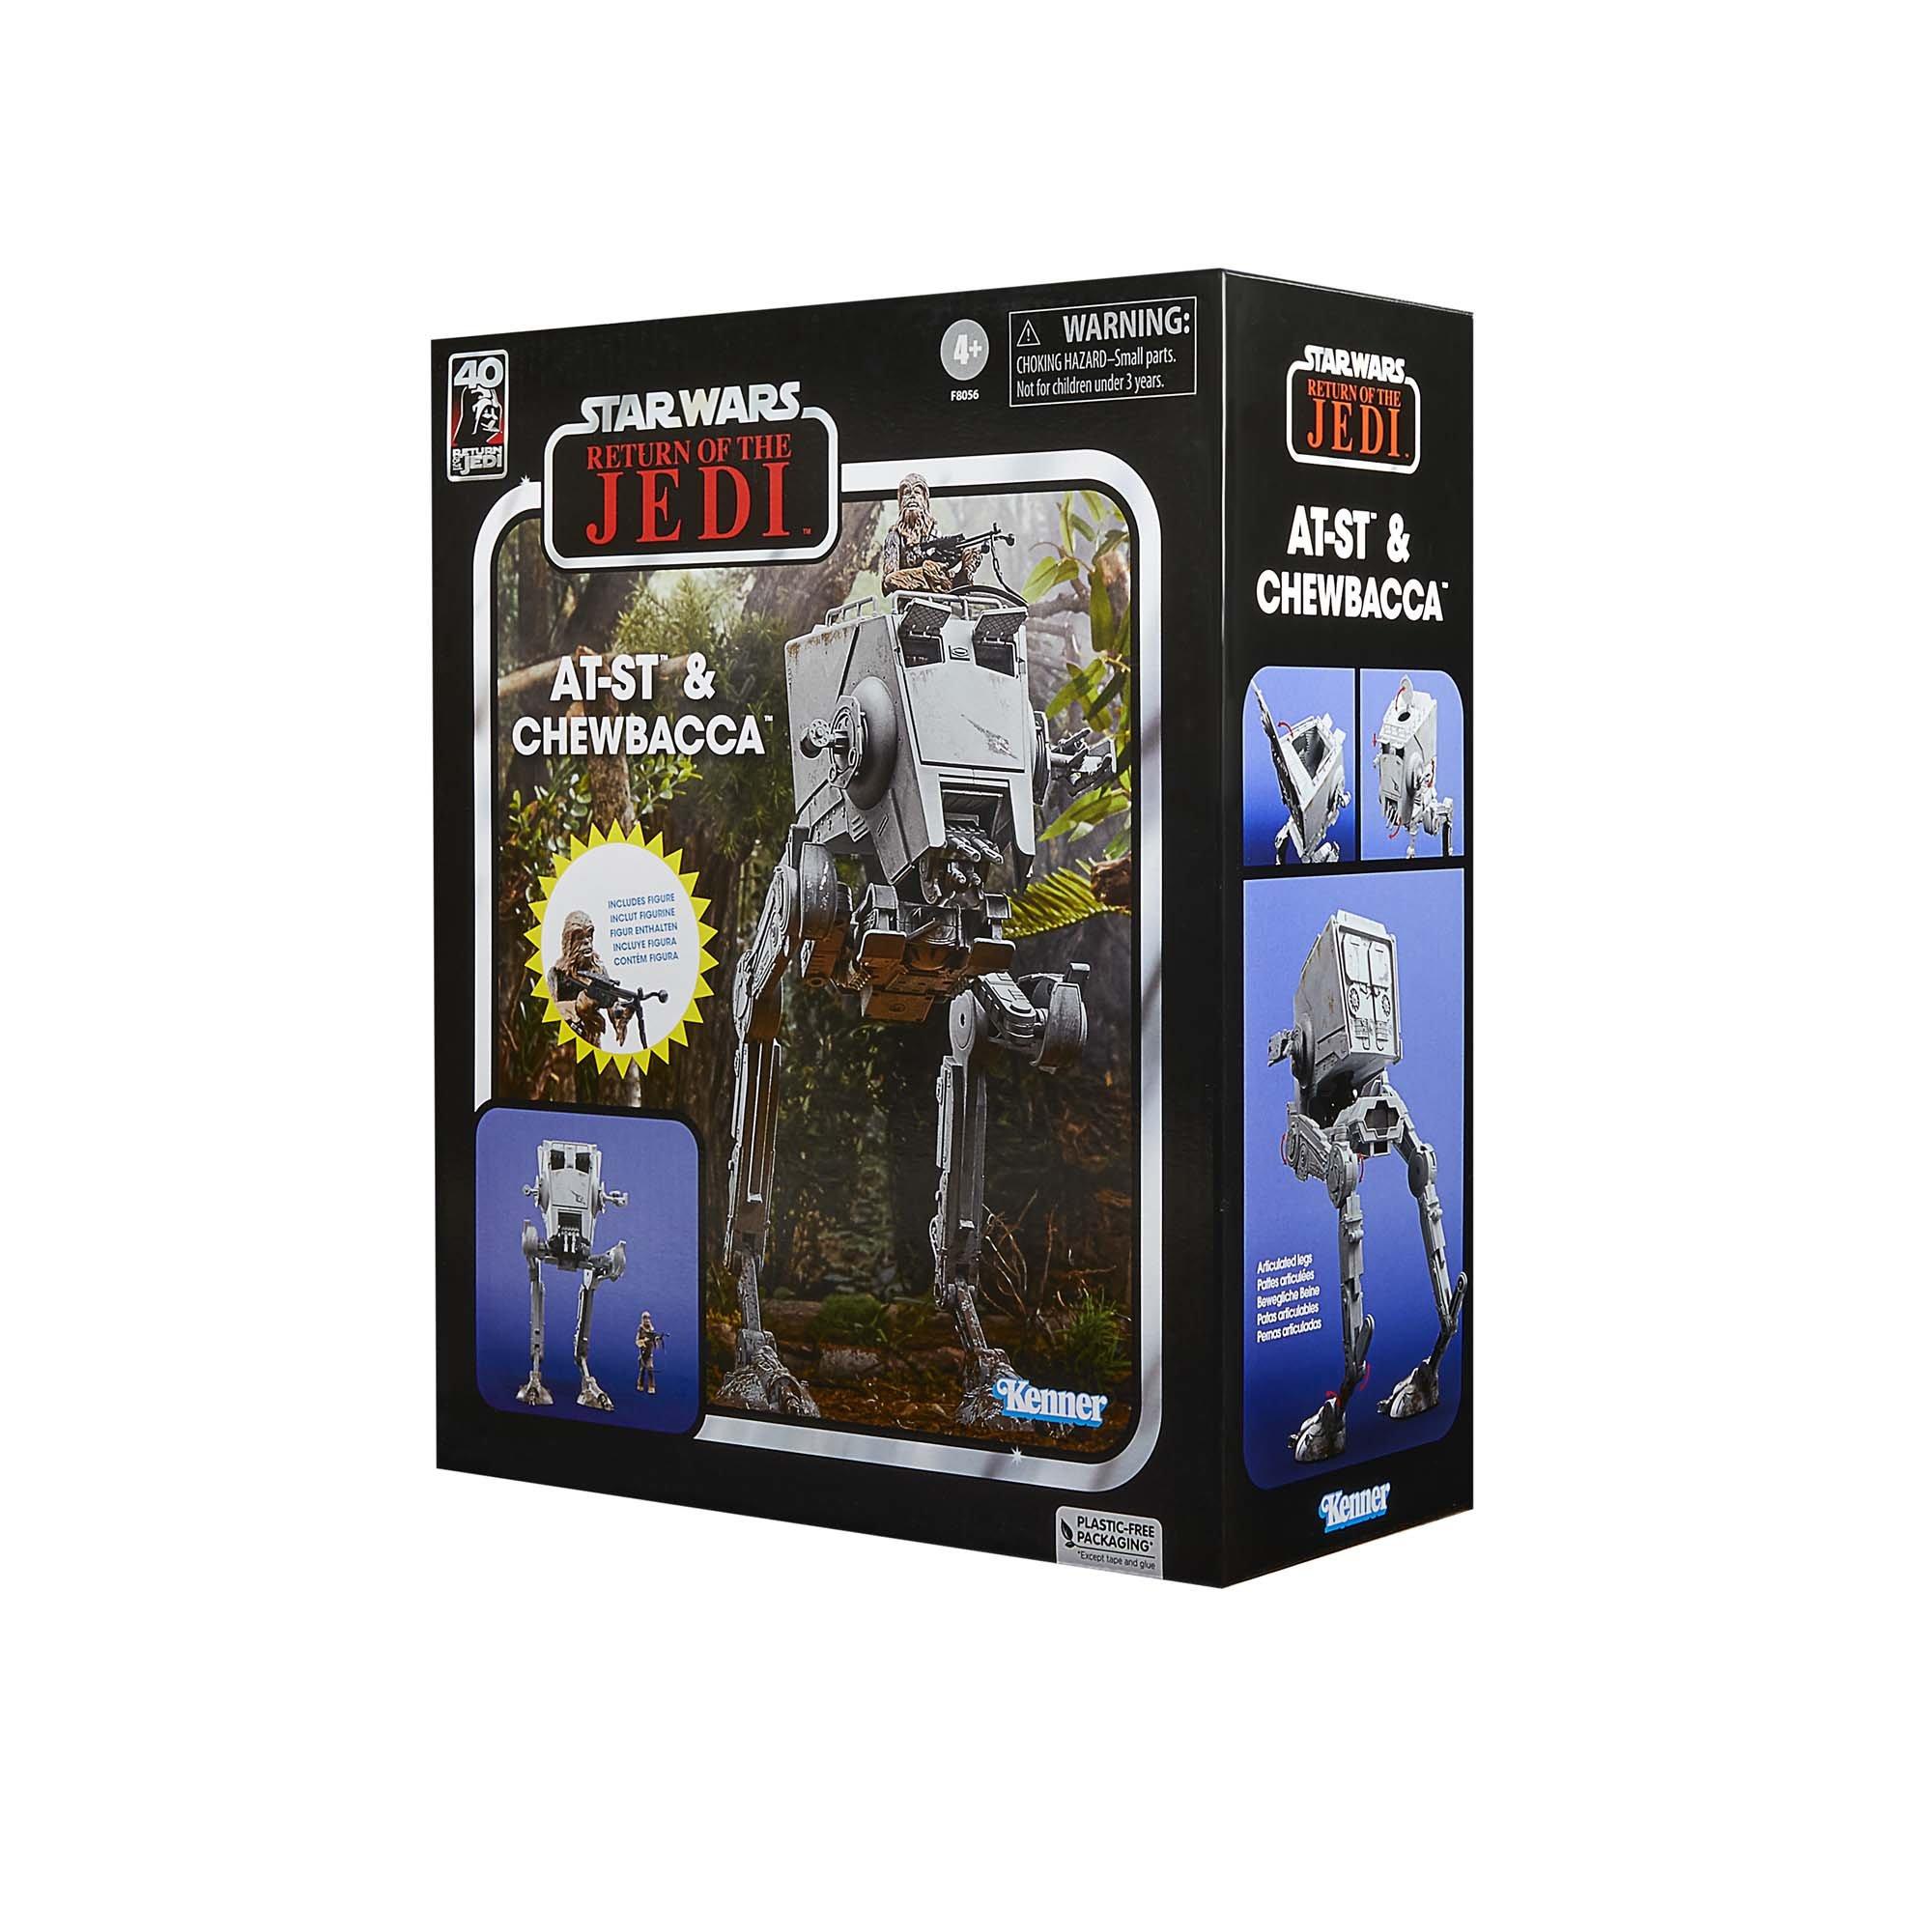 8 Pcs Star Wars Action Figures Building Blocks Toys Sets, Space